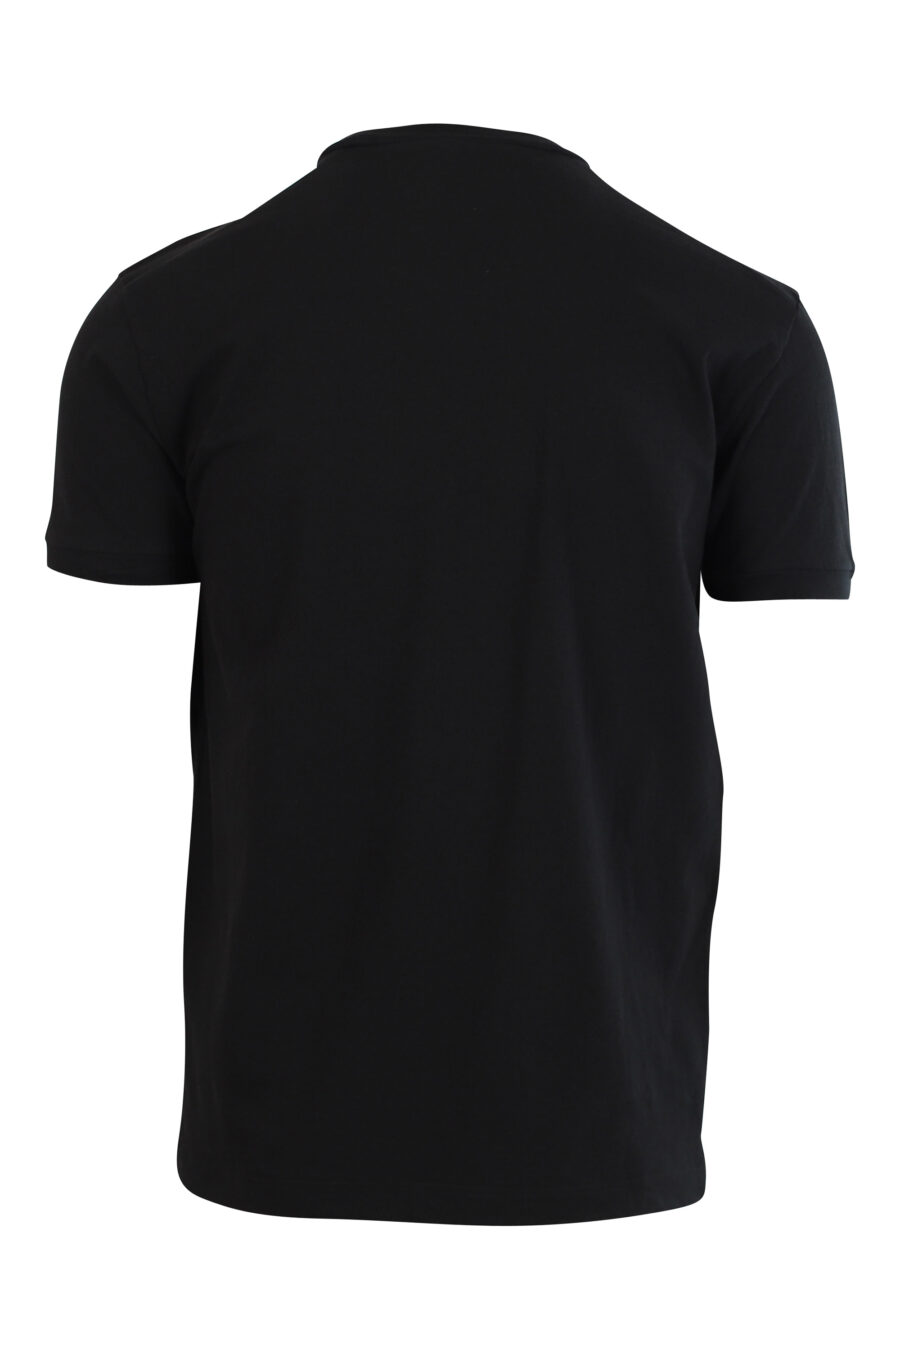 T-shirt preta com minilogo "dsquared2 milano" - 8058049836090 2